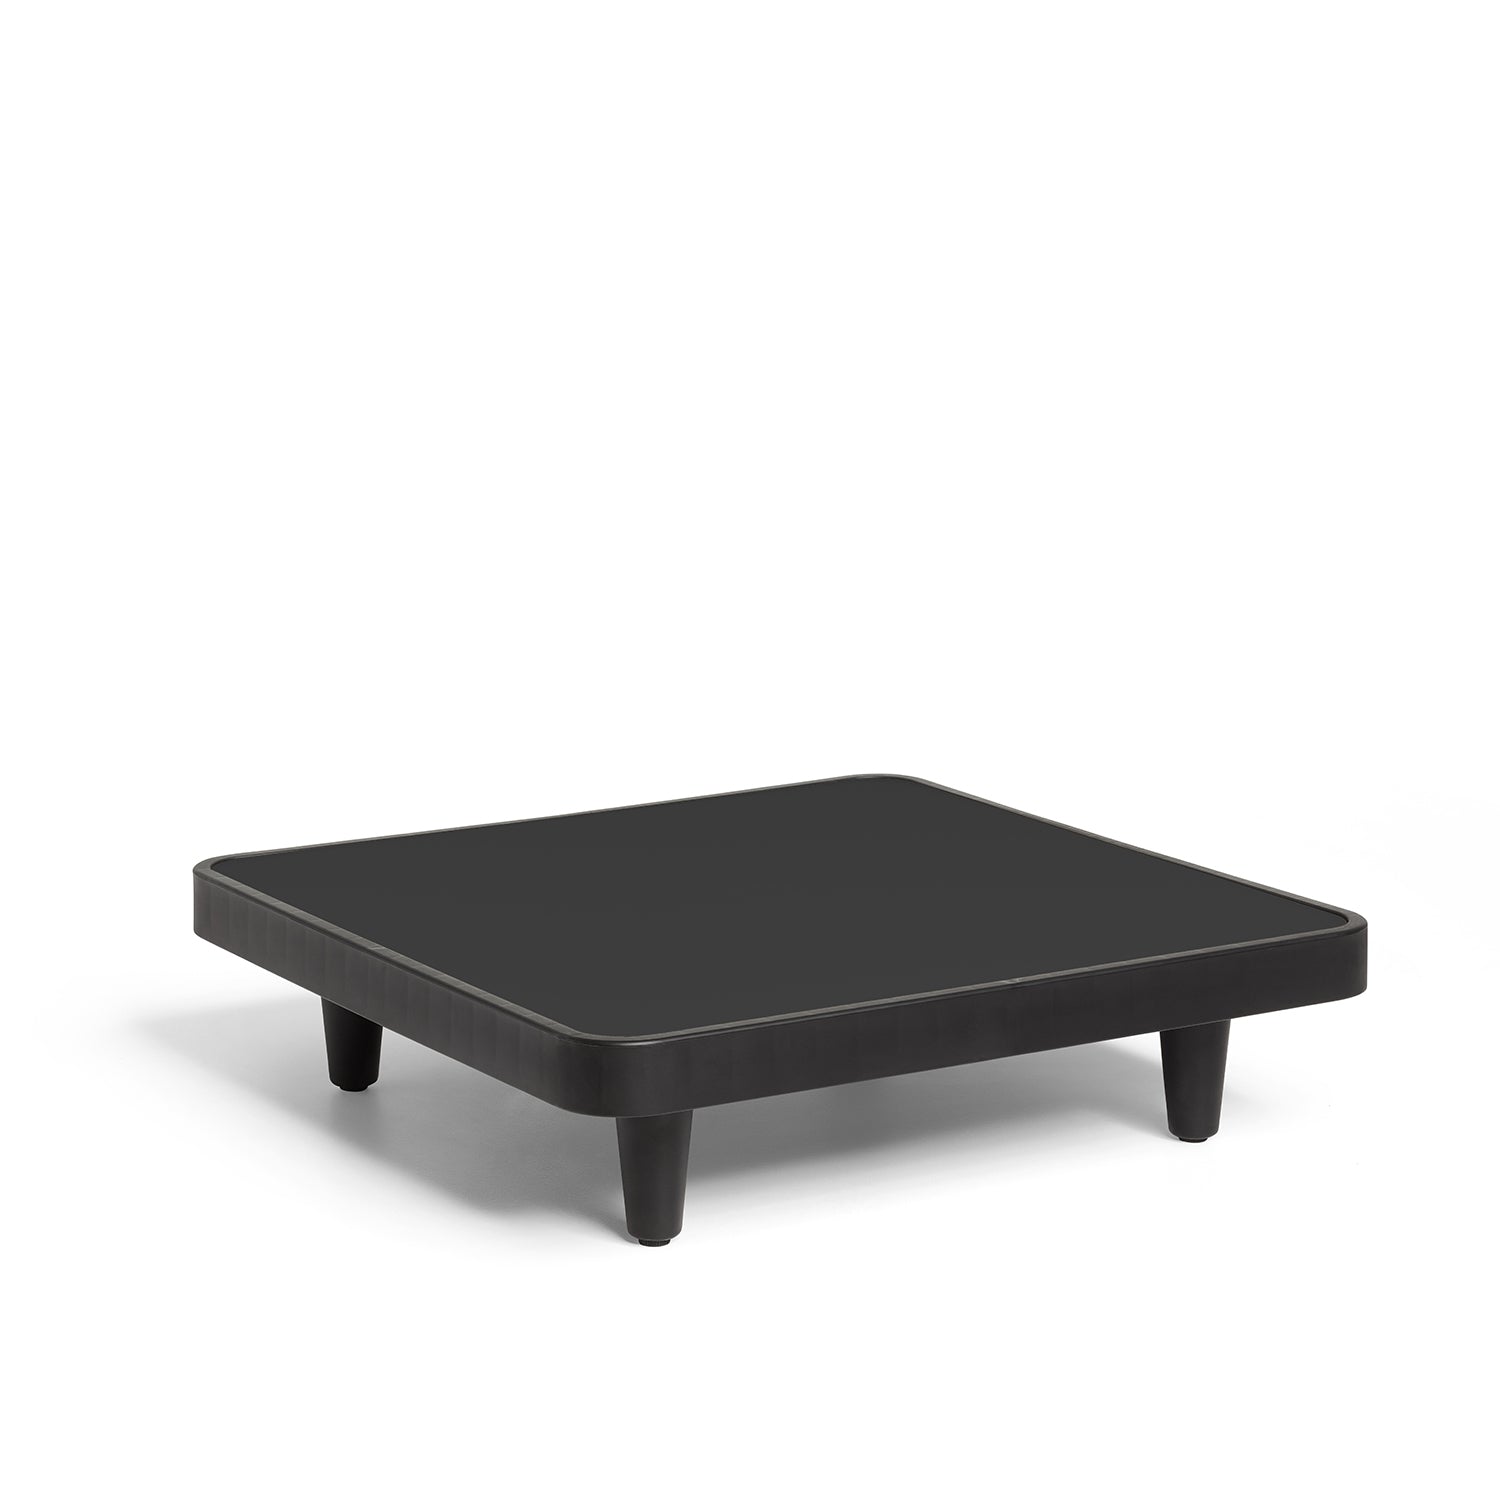 Paletti Table - The Design Choice